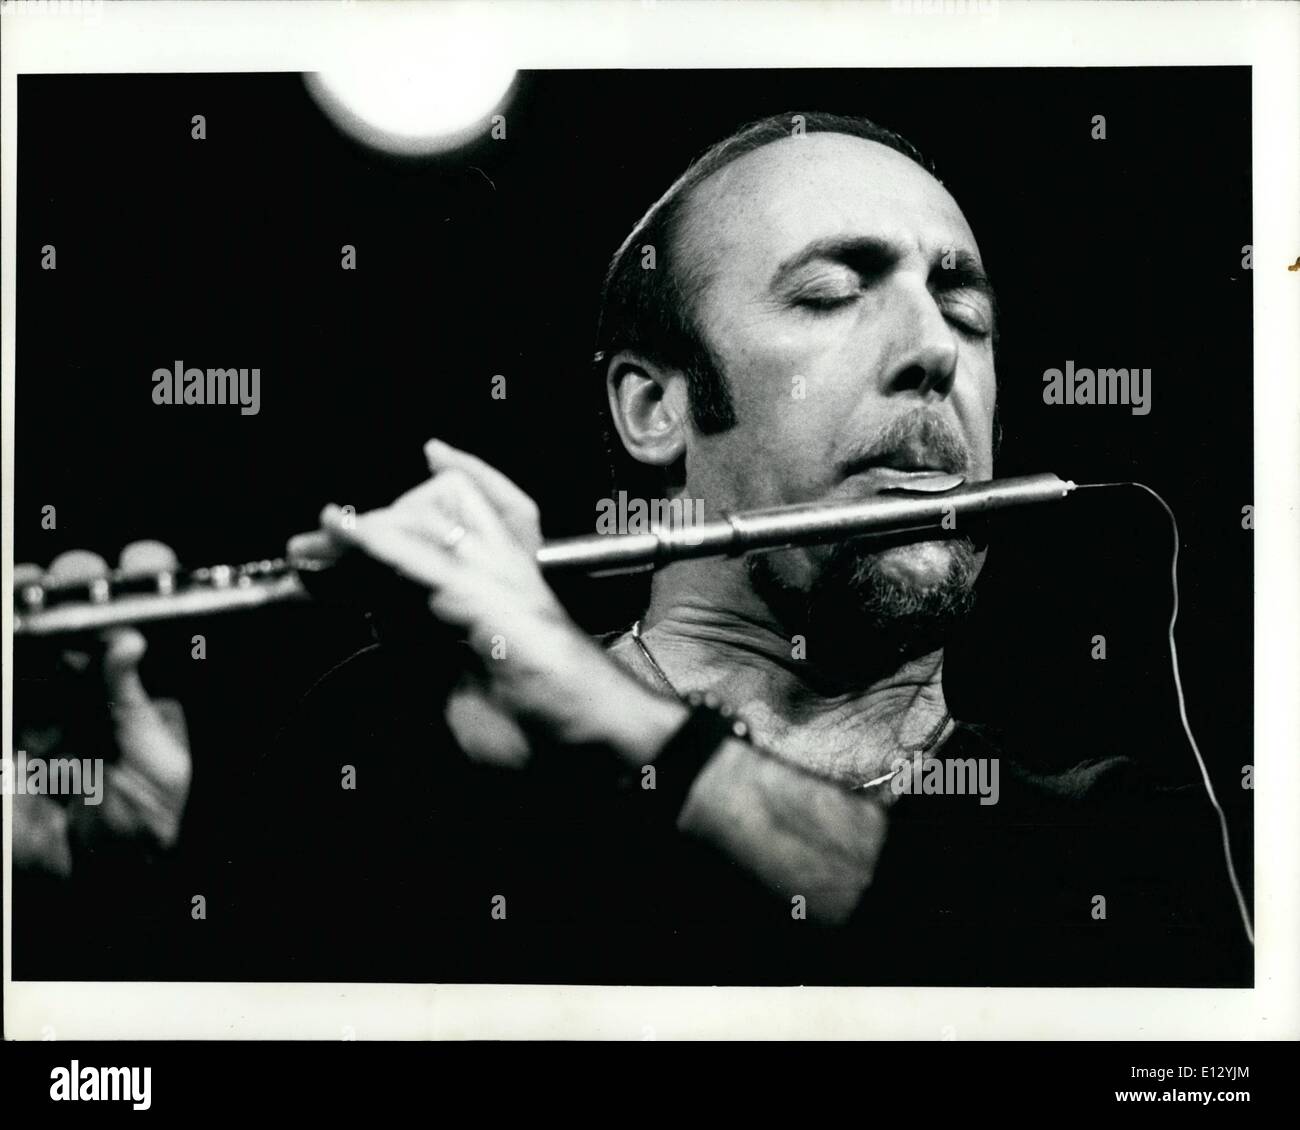 Febbraio 25, 2012 - Jazz flautista Herbie Mann Performing presso il villaggio di gate, nightclub di New York City, 1978. Foto Stock